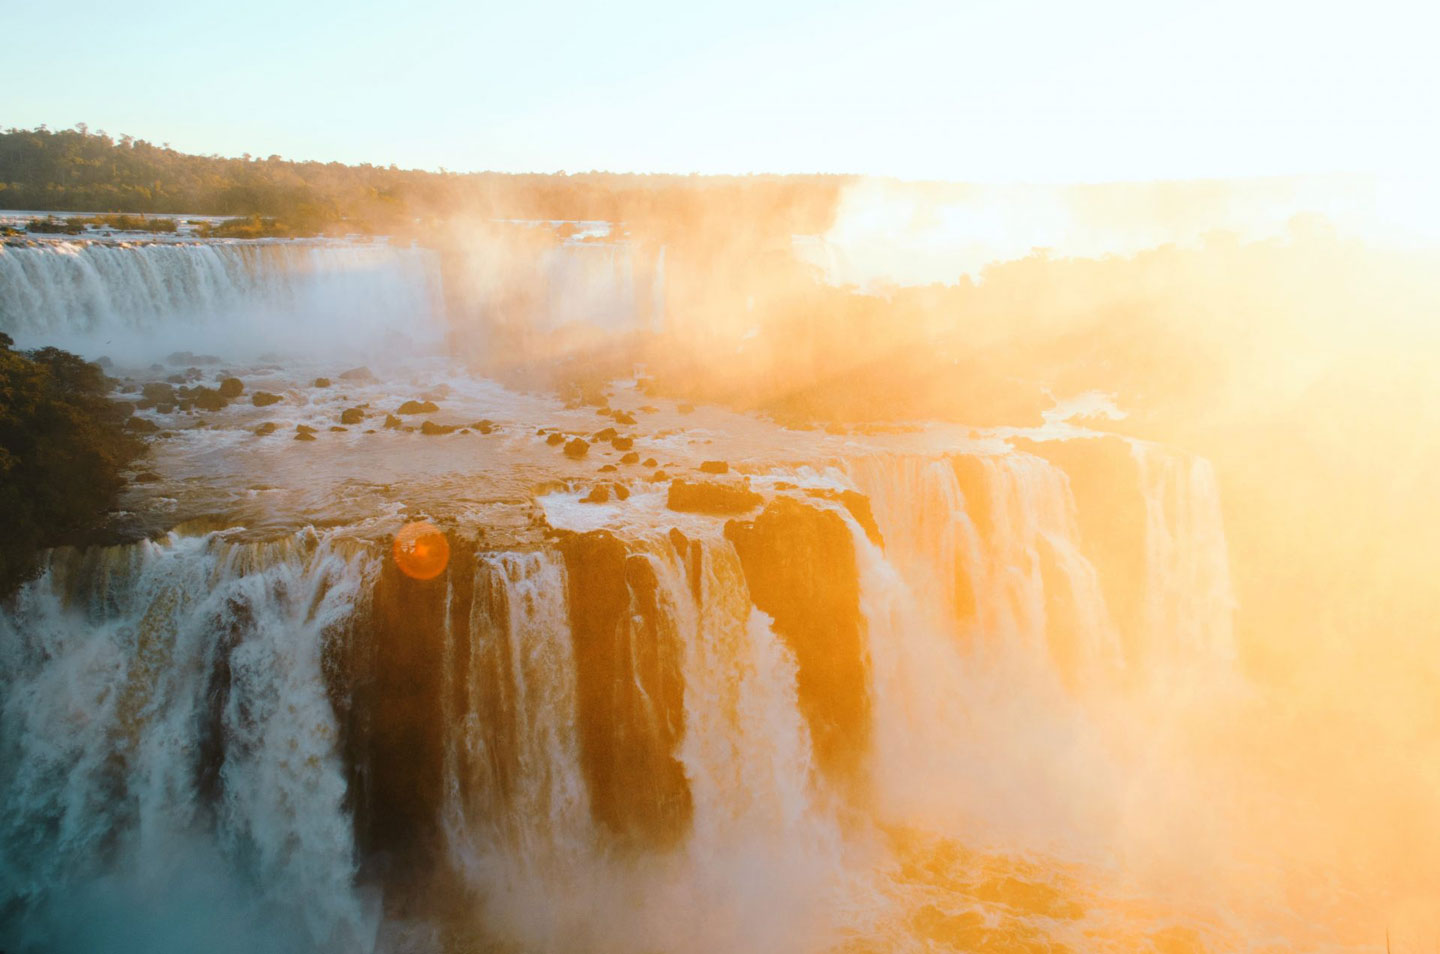 waterfalls of Iguaçu